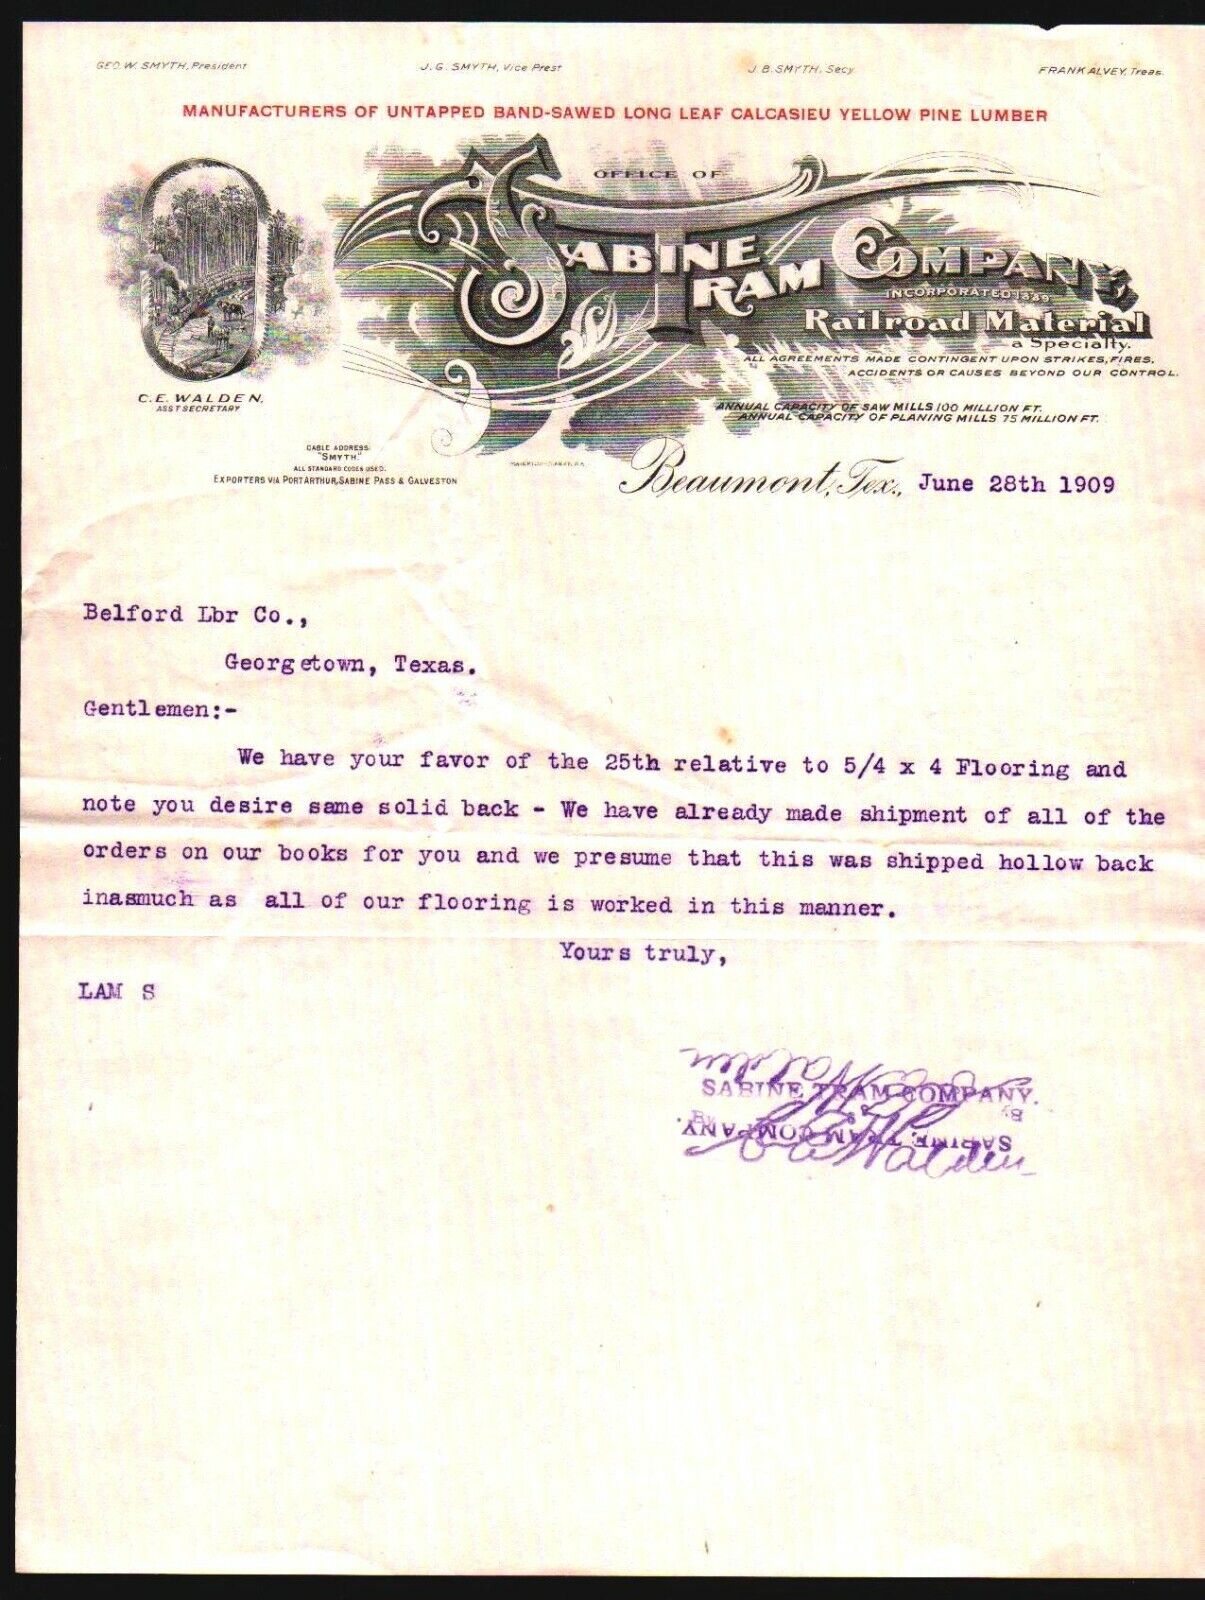 1909 Beaumont Tx - Sabine Tram Company - Railroad Material - Letter Head Bill